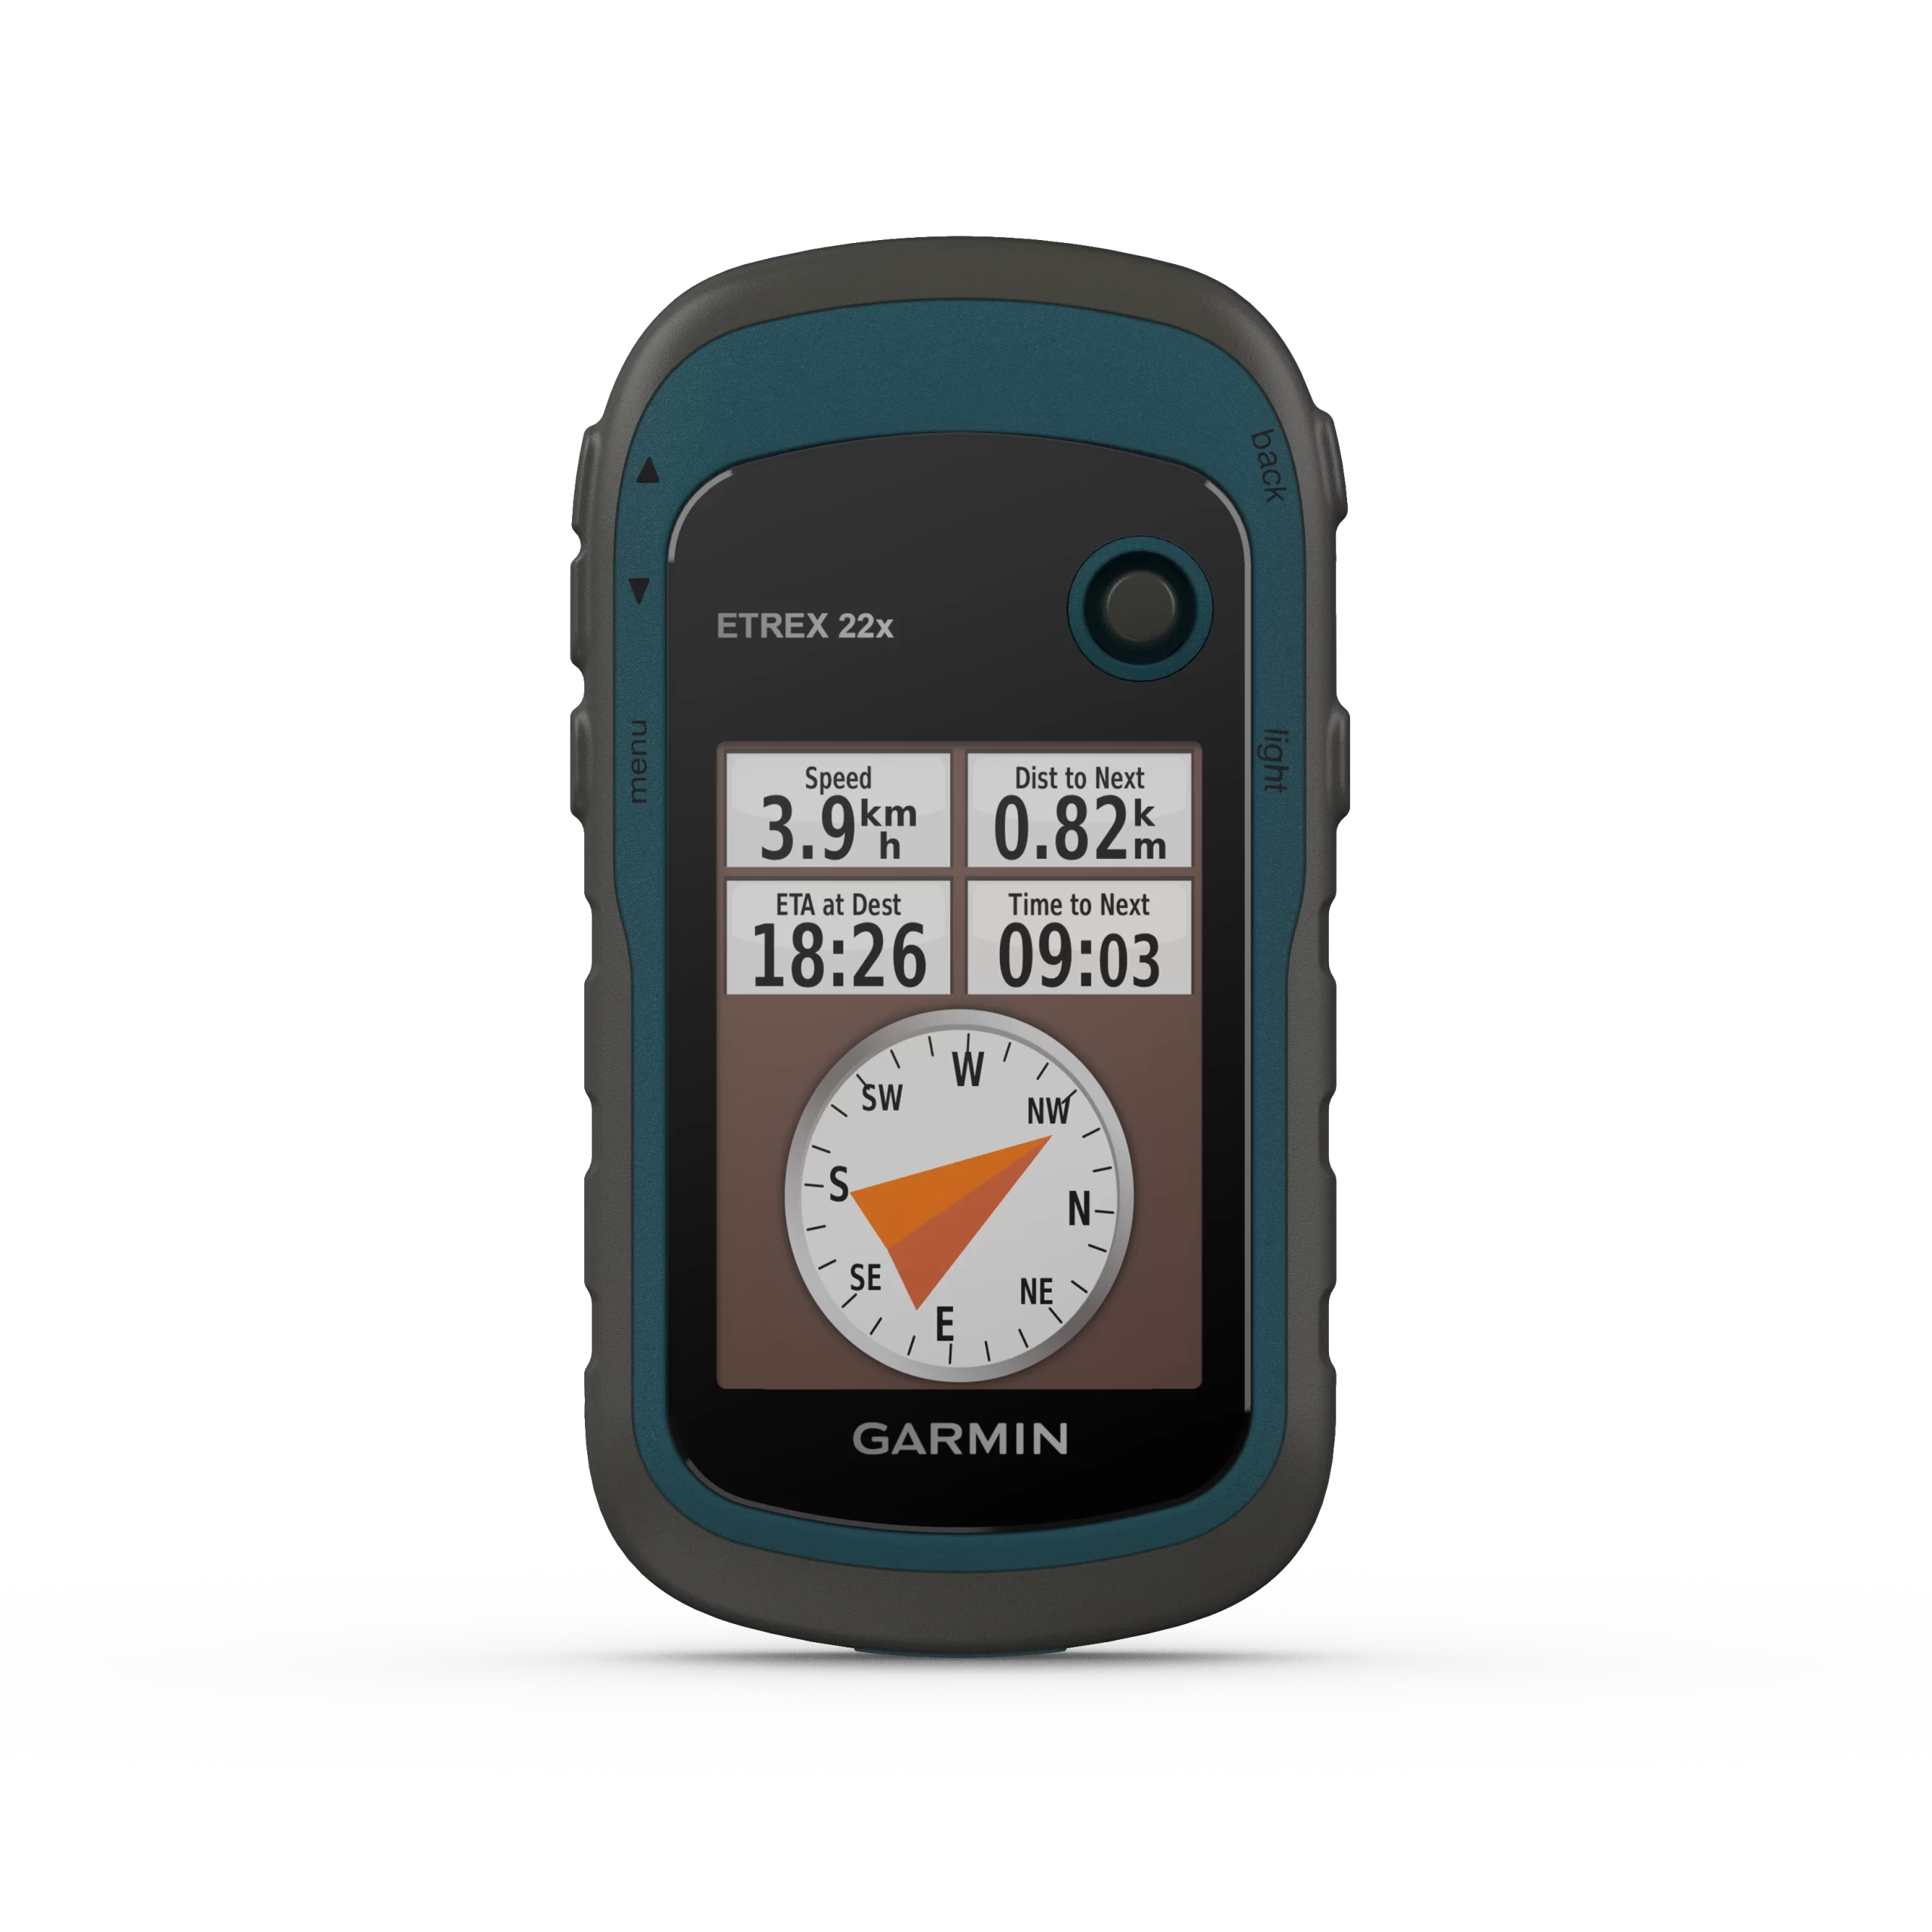 Garmin eTrex 22x for geocaching